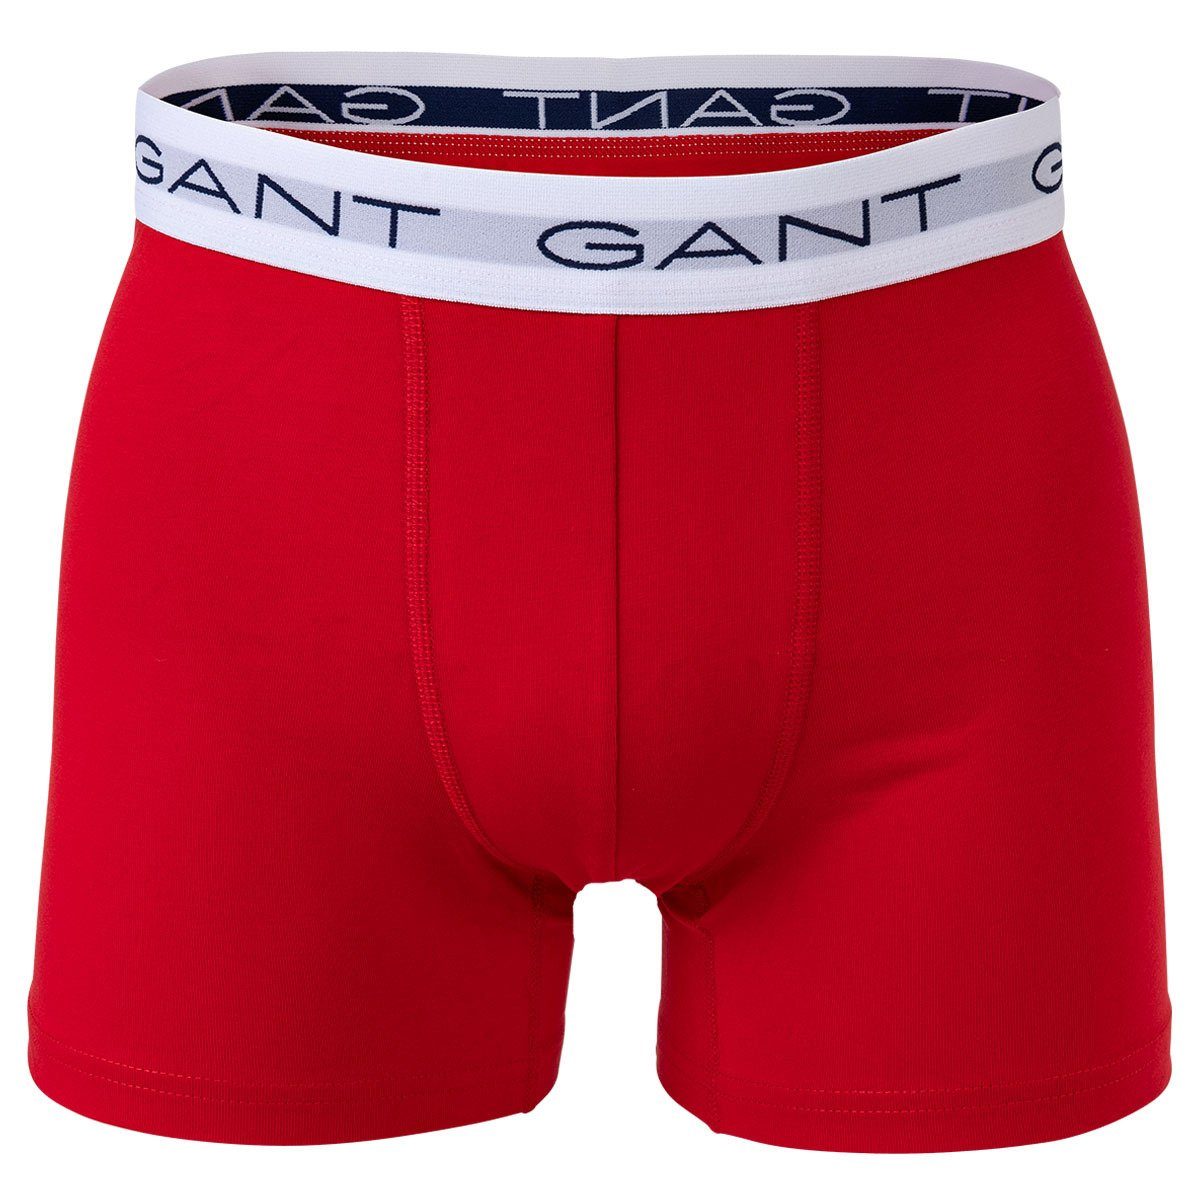 Shorts, 3er Gant Boxer Mehrfarbig Boxer Pack Briefs Herren - Boxer